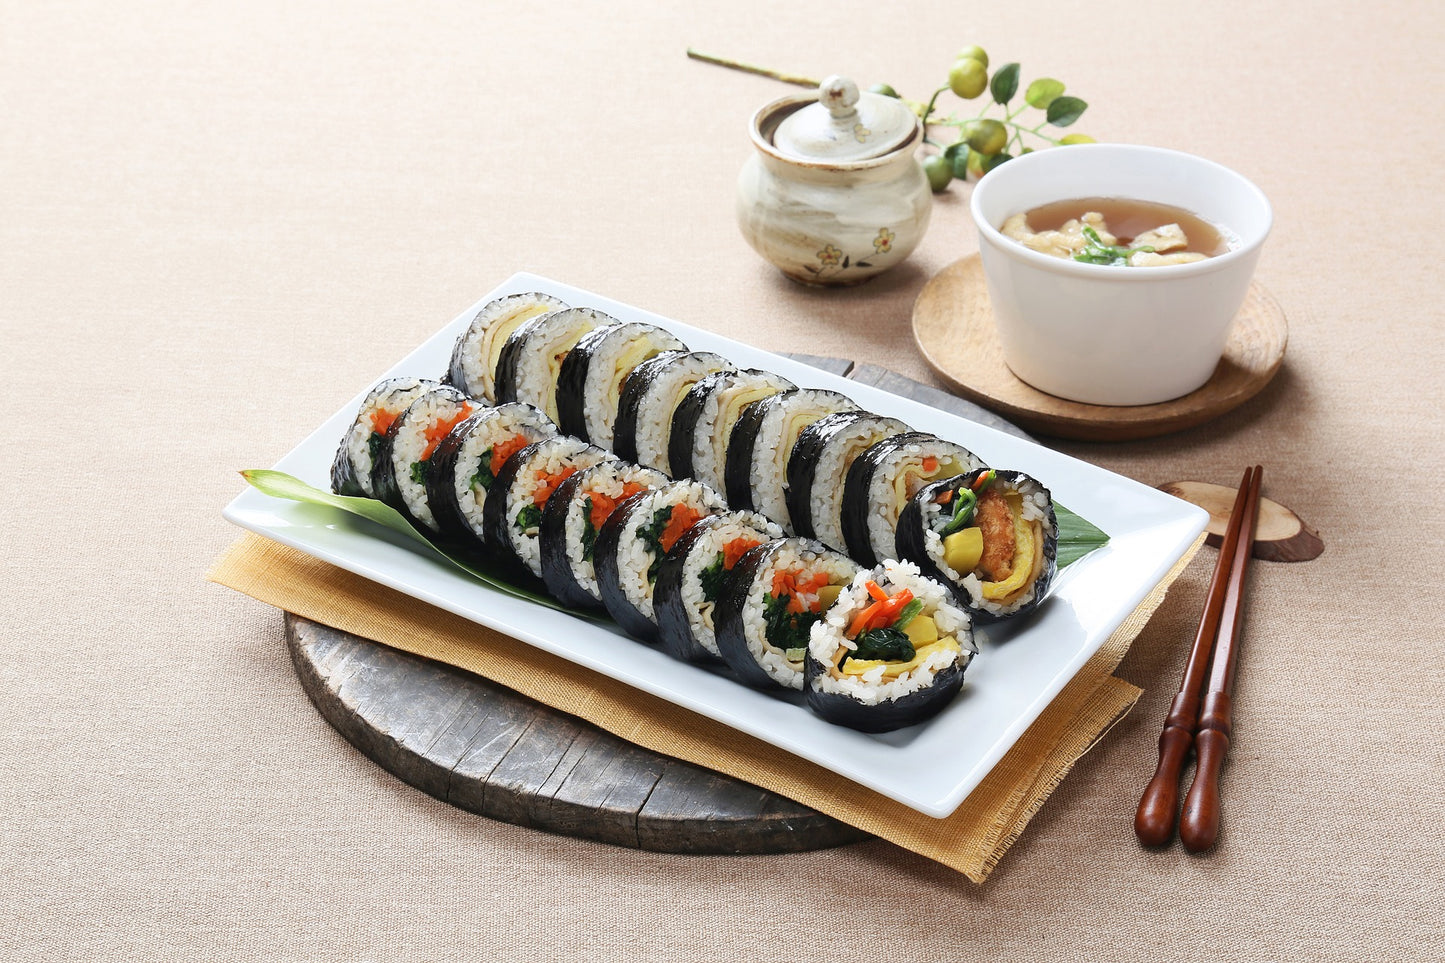 Organic Yaki sushi nori (50 full sheets), 125g, Vegan Roasted seaweed, Product of S. Korea /NuEats